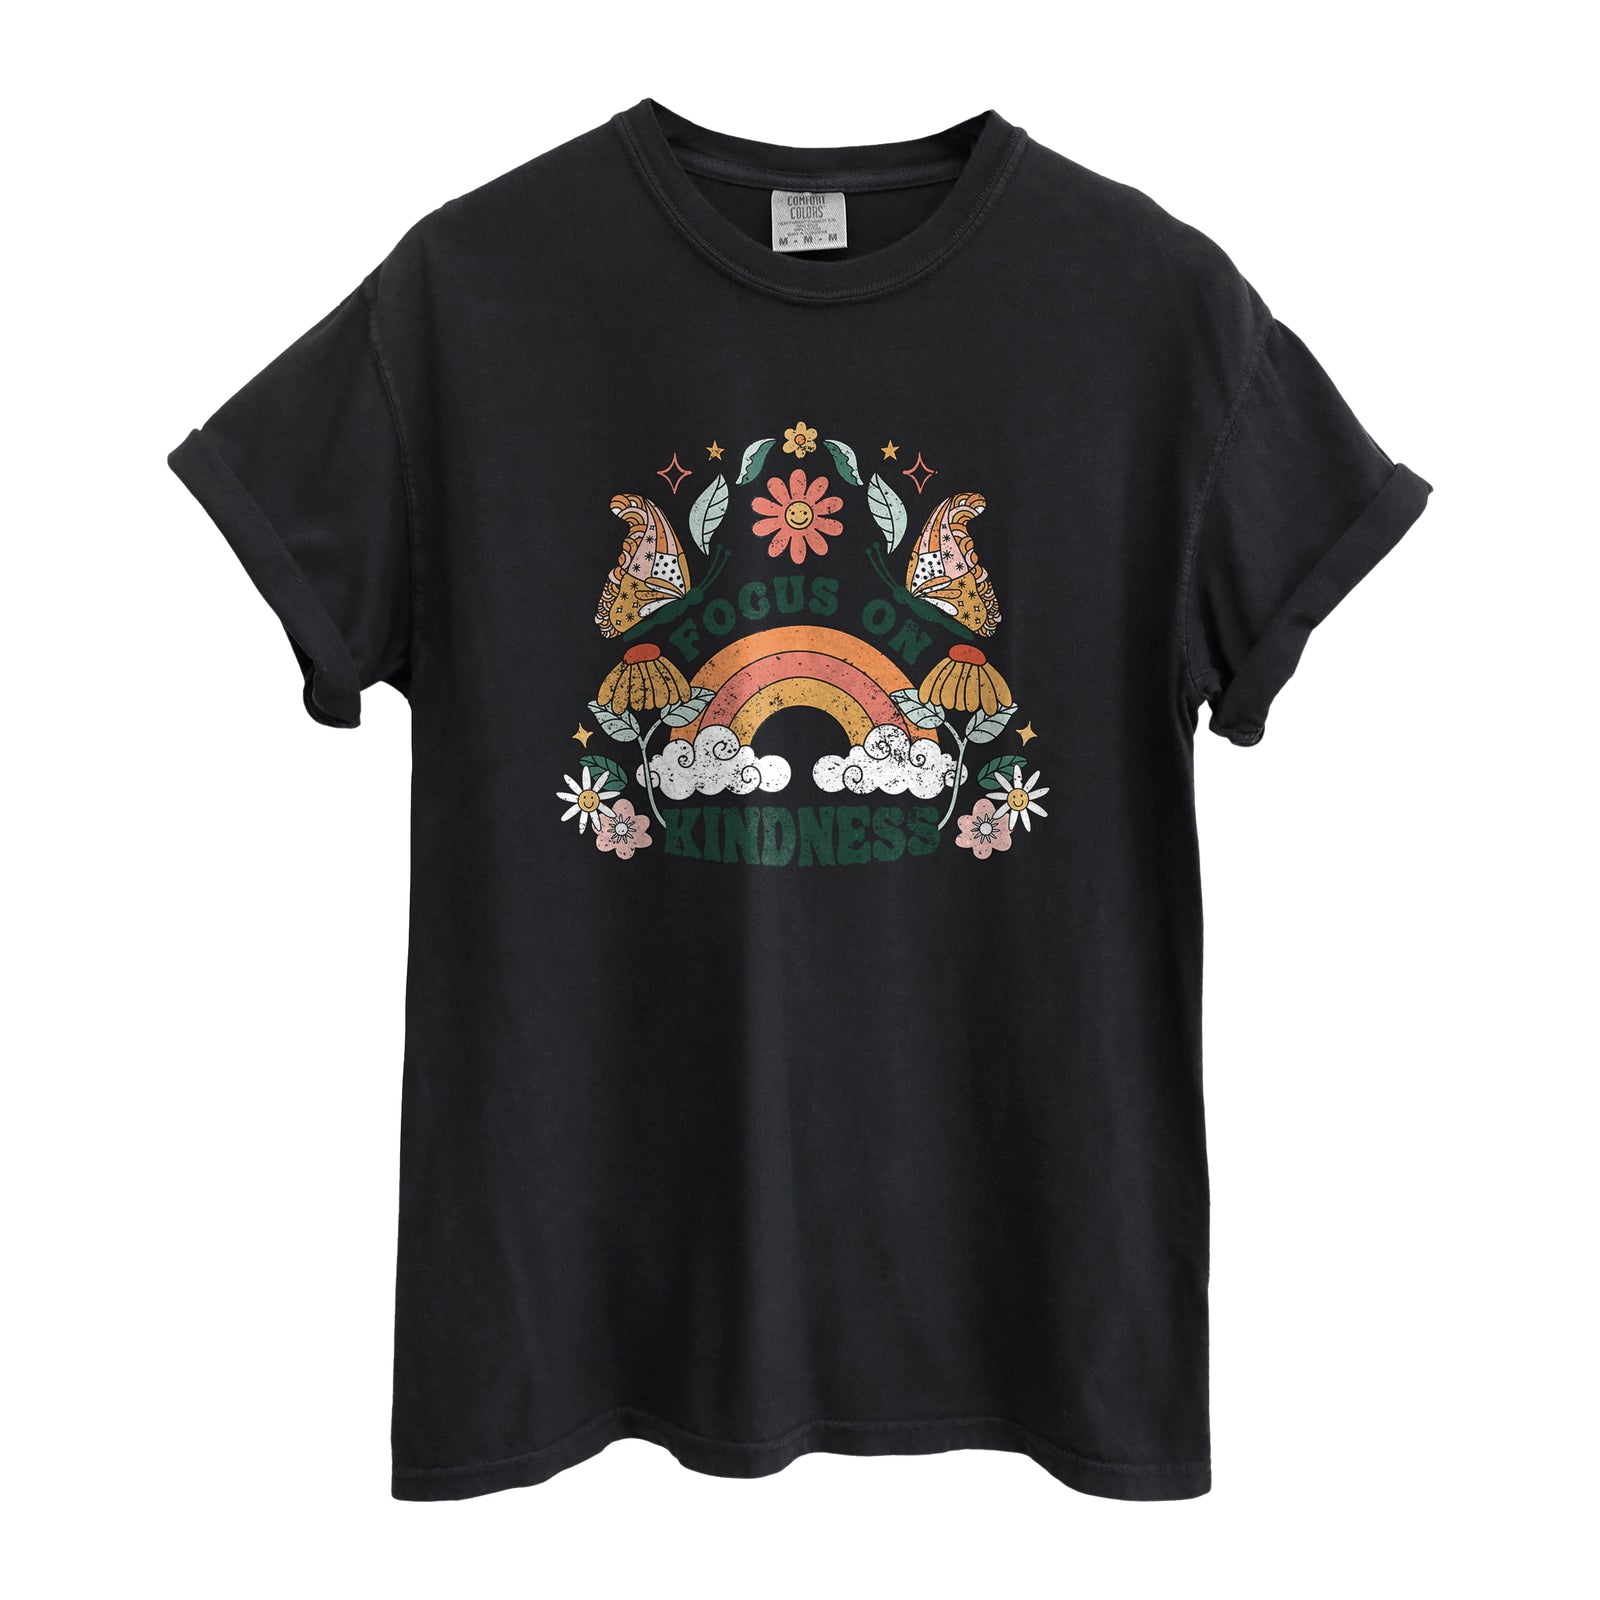 Focus on Kindness Oversized Shirt for Women & Men Garment-Dyed Graphic Tee